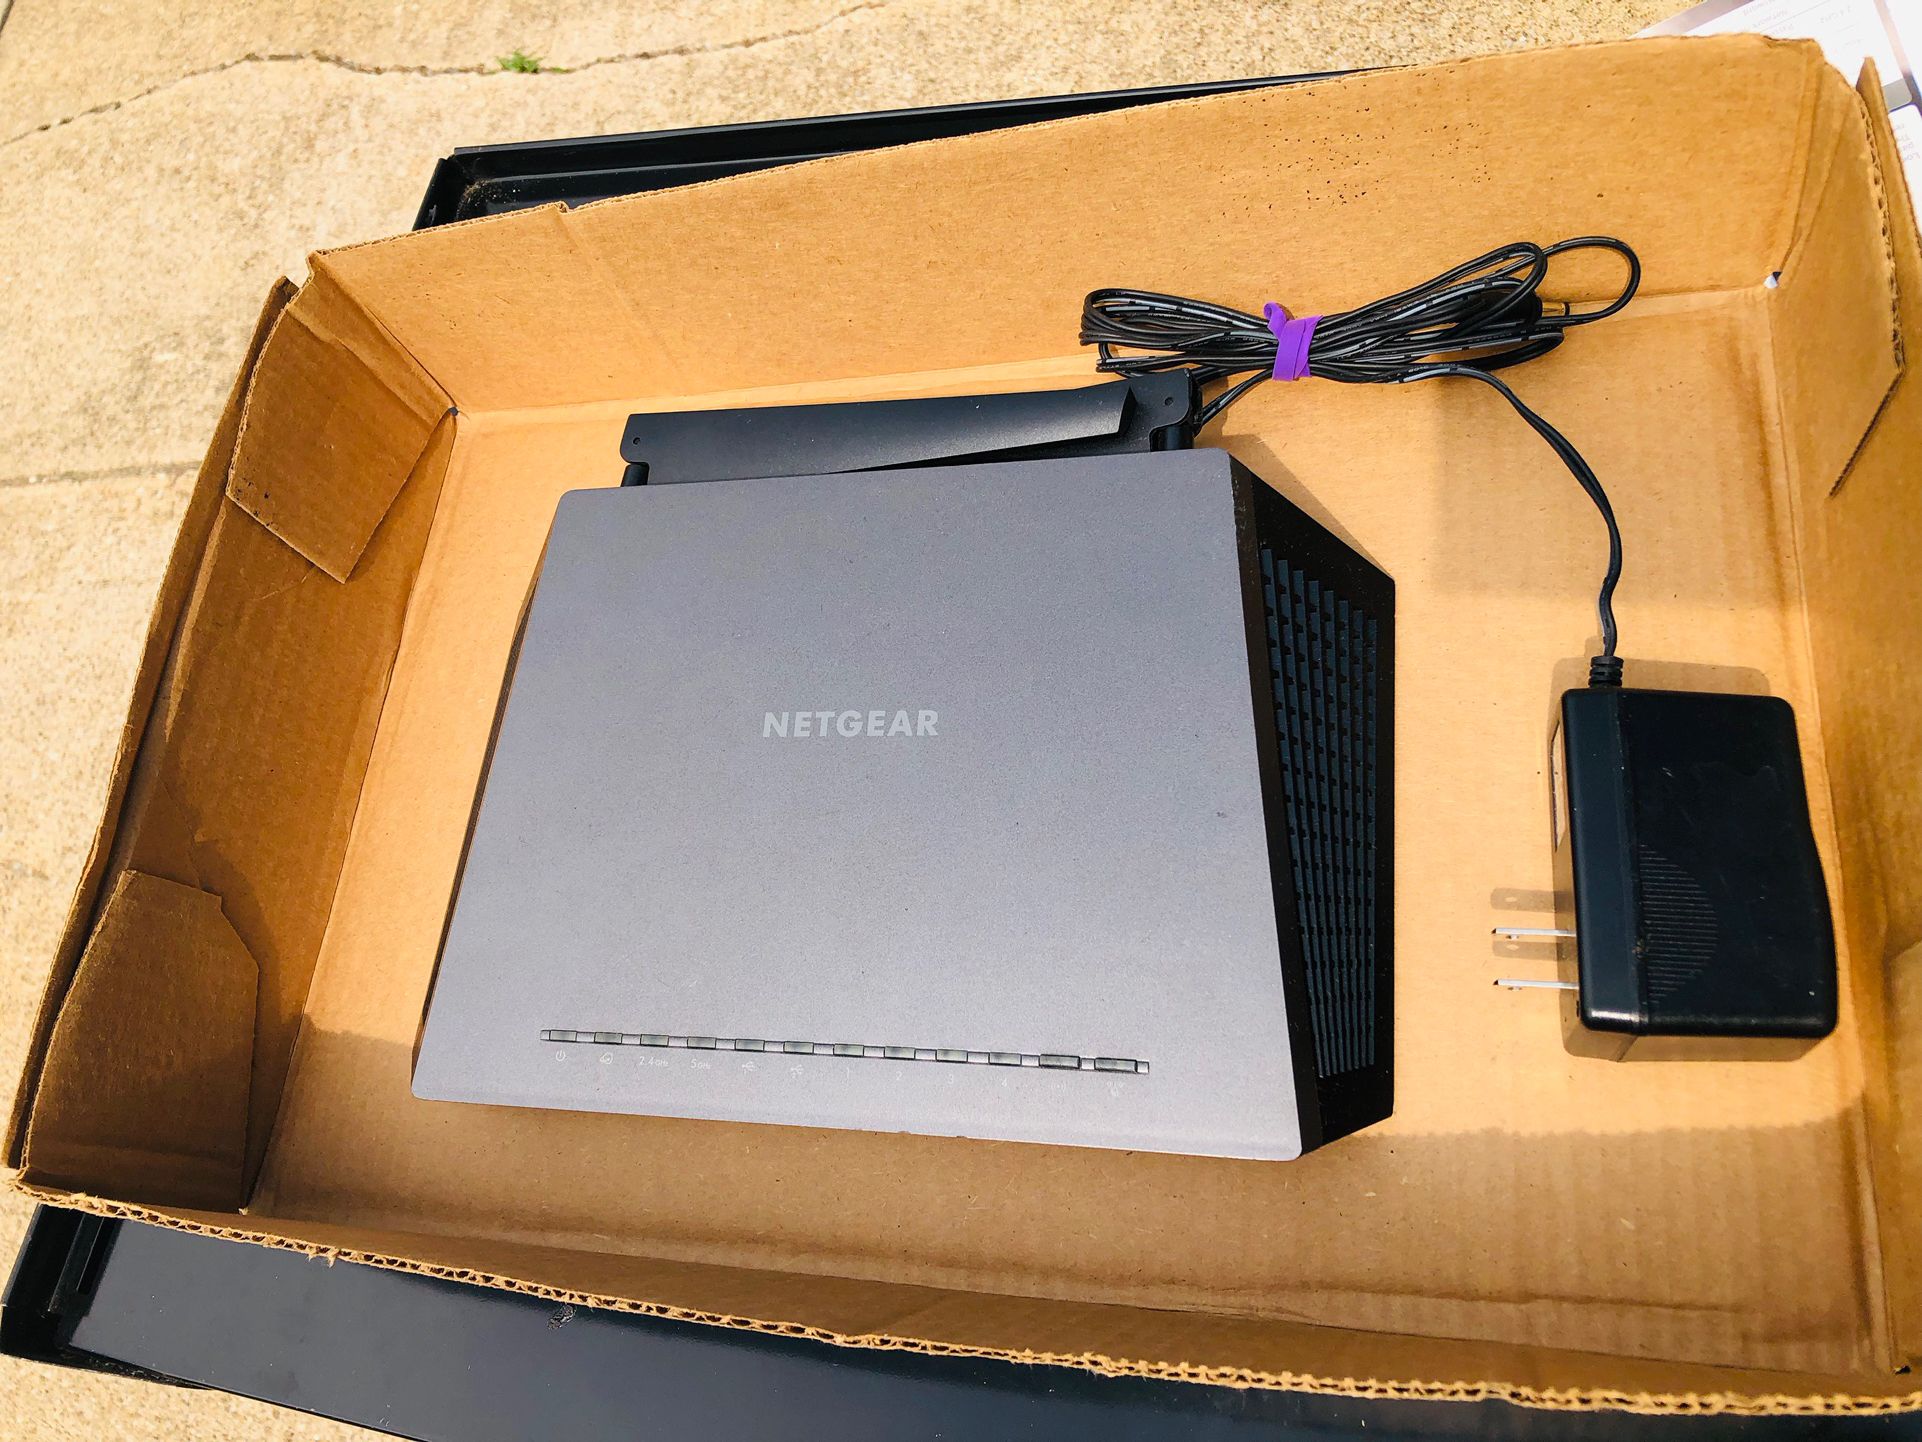 NETGEAR Nighthawk Smart Wi-Fi Router (R7000) - AC1900